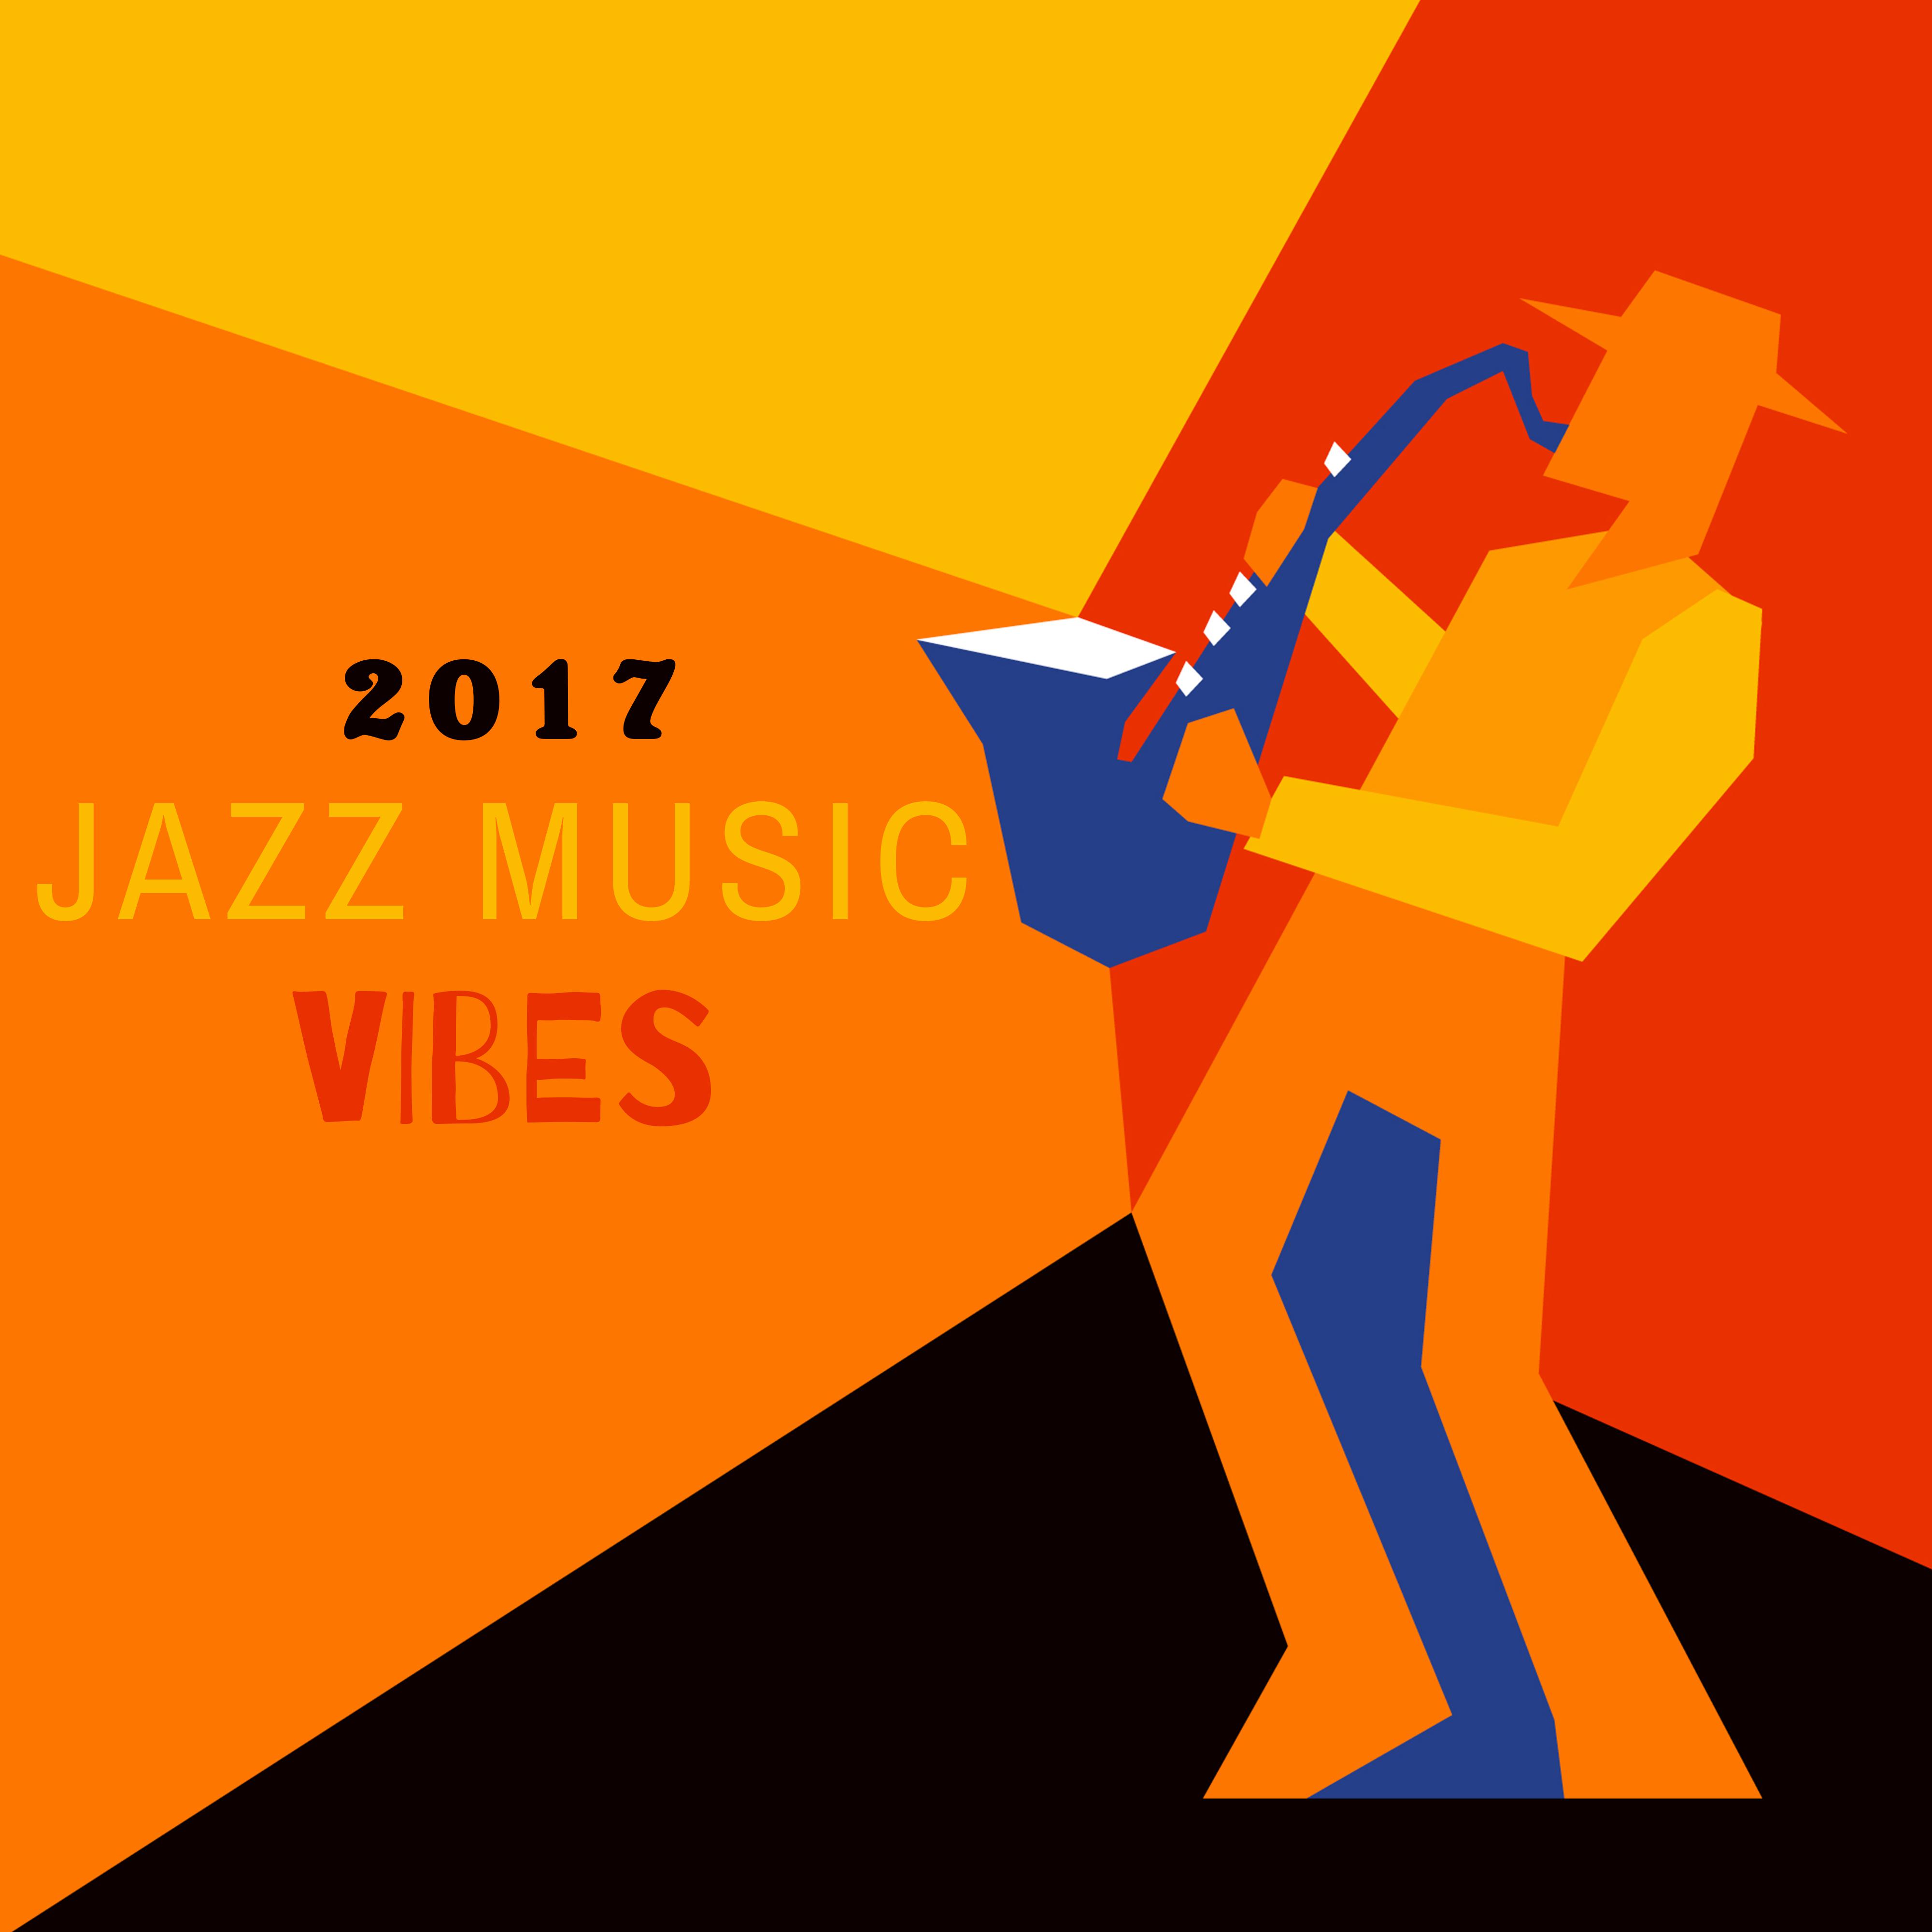 2017 Jazz Music Vibes